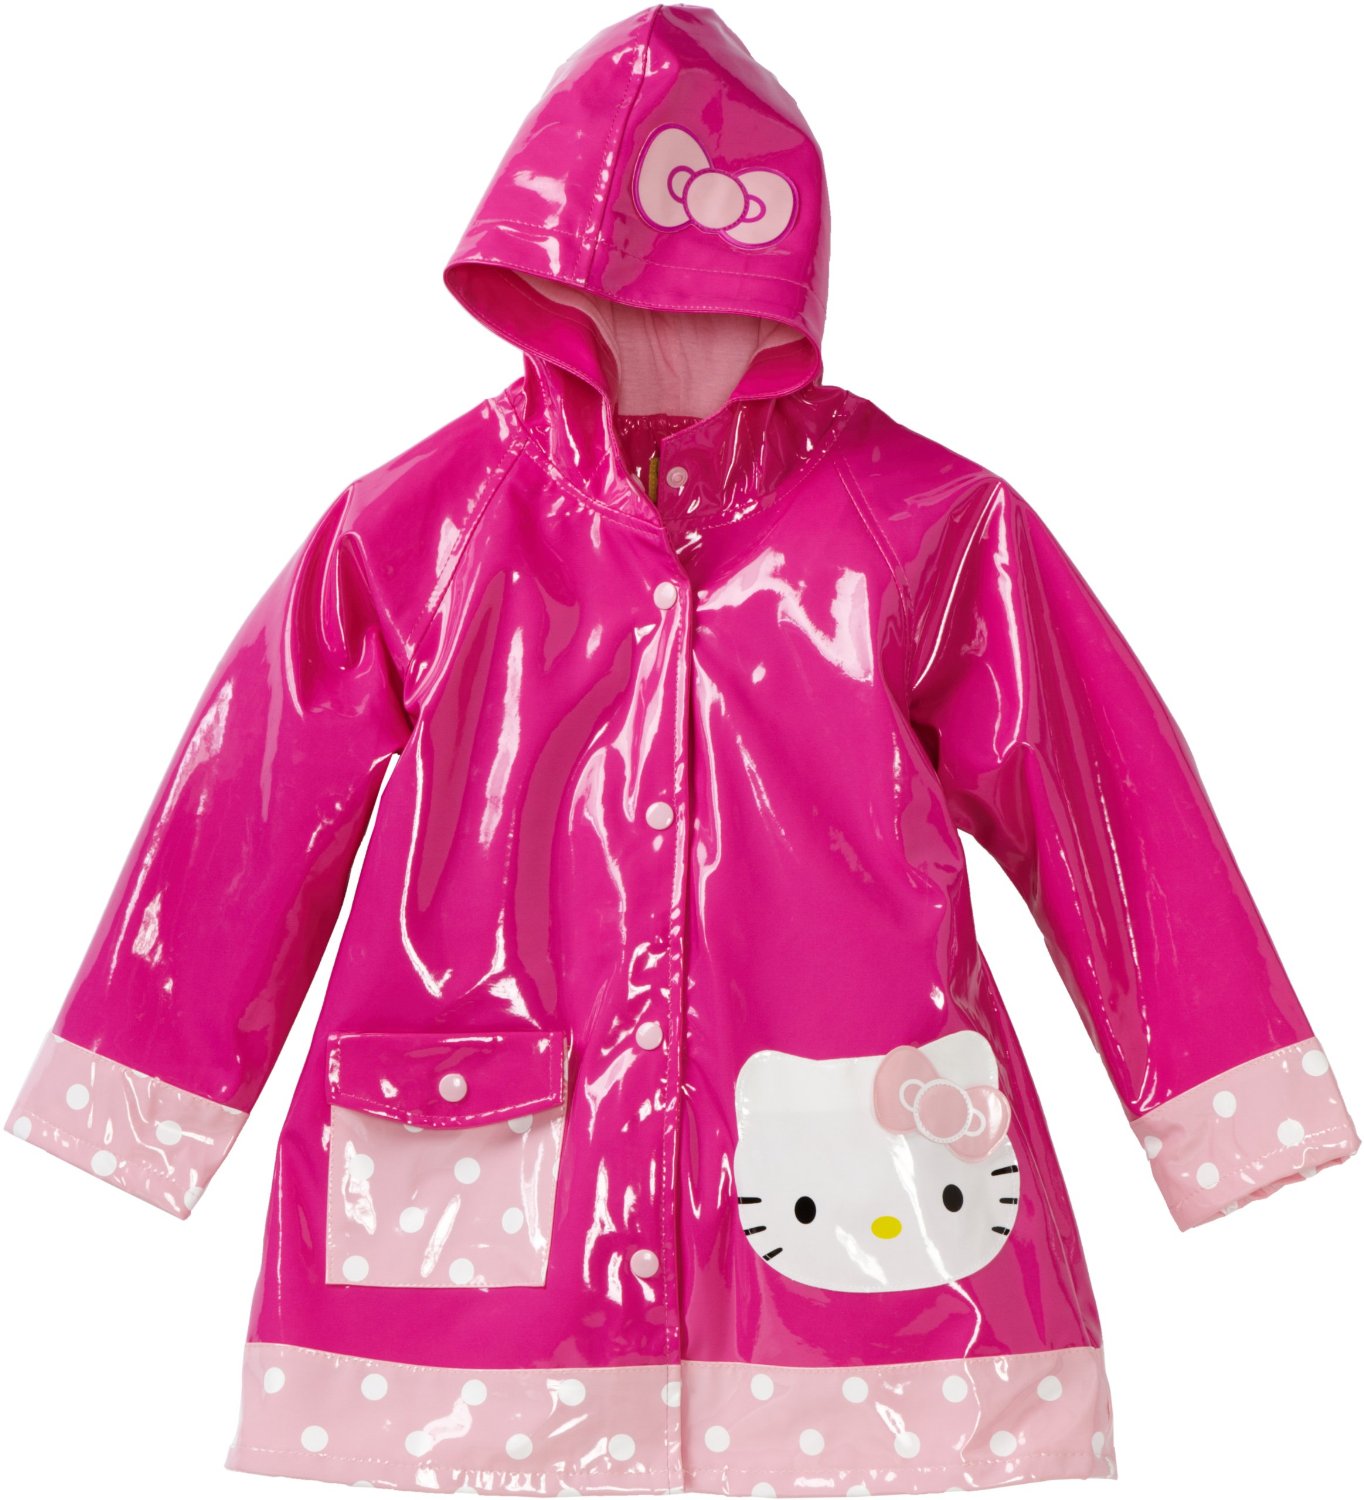 Western Chief Girls 2-6x Hello Kitty Polka Dot Cutie Raincoat $25.11(40%)